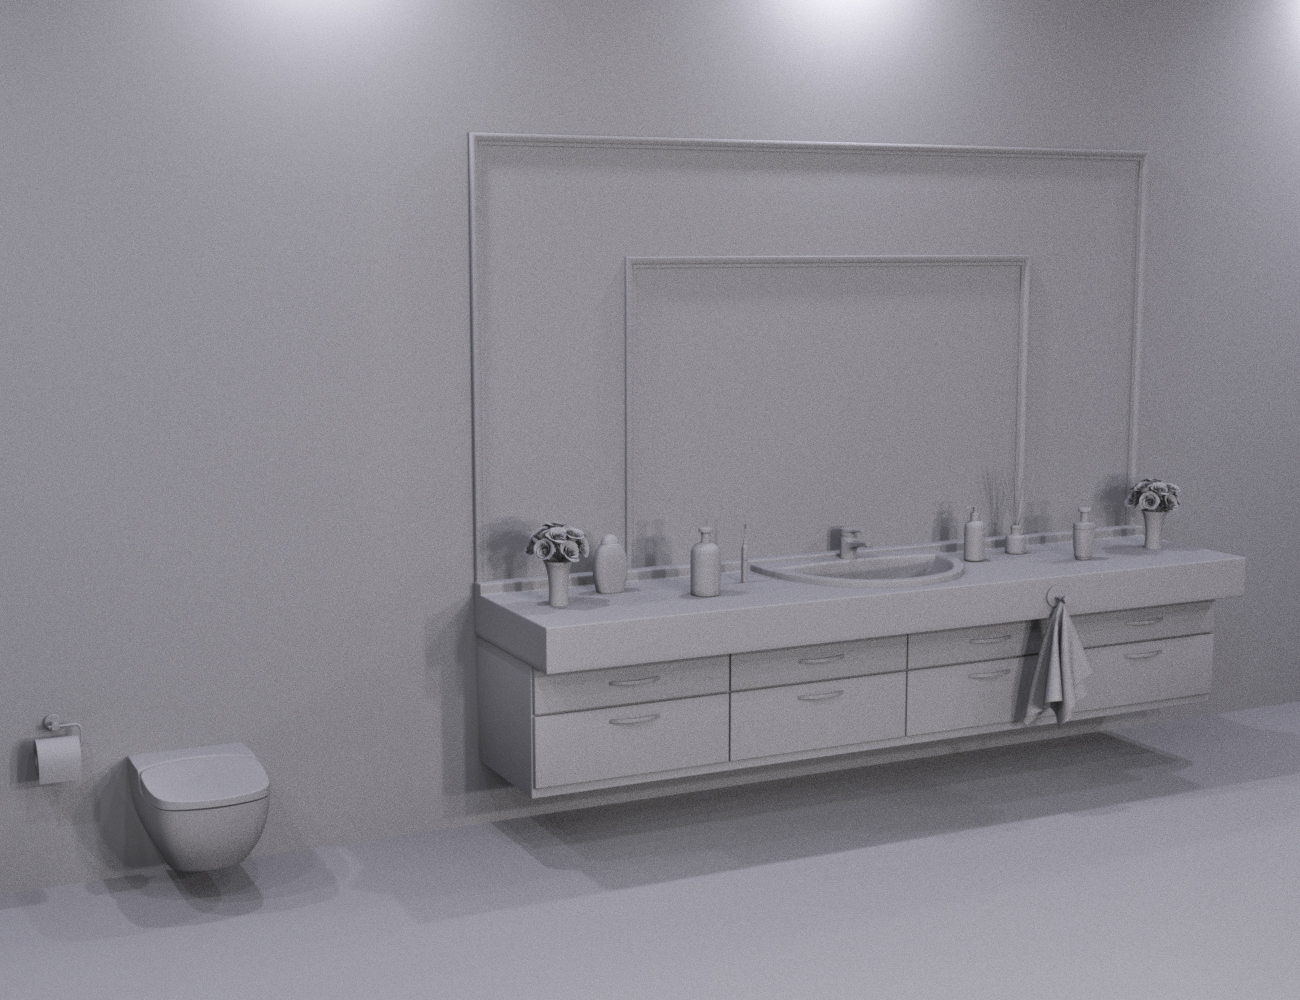 Lavish Bathroom by: Charlie, 3D Models by Daz 3D